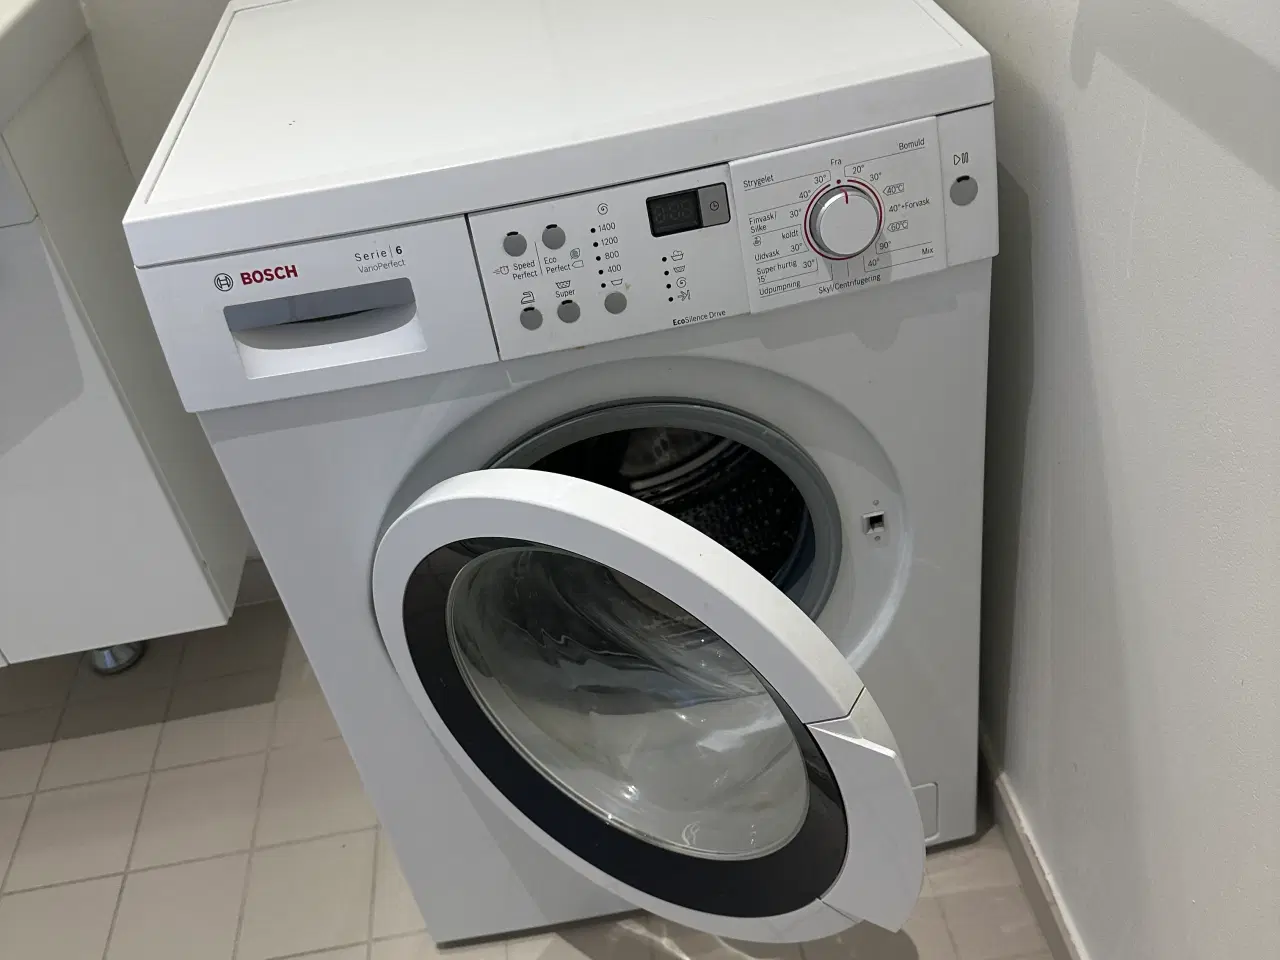 Billede 1 - Bocsh Vaskemaskine velholdt og velfungerende.